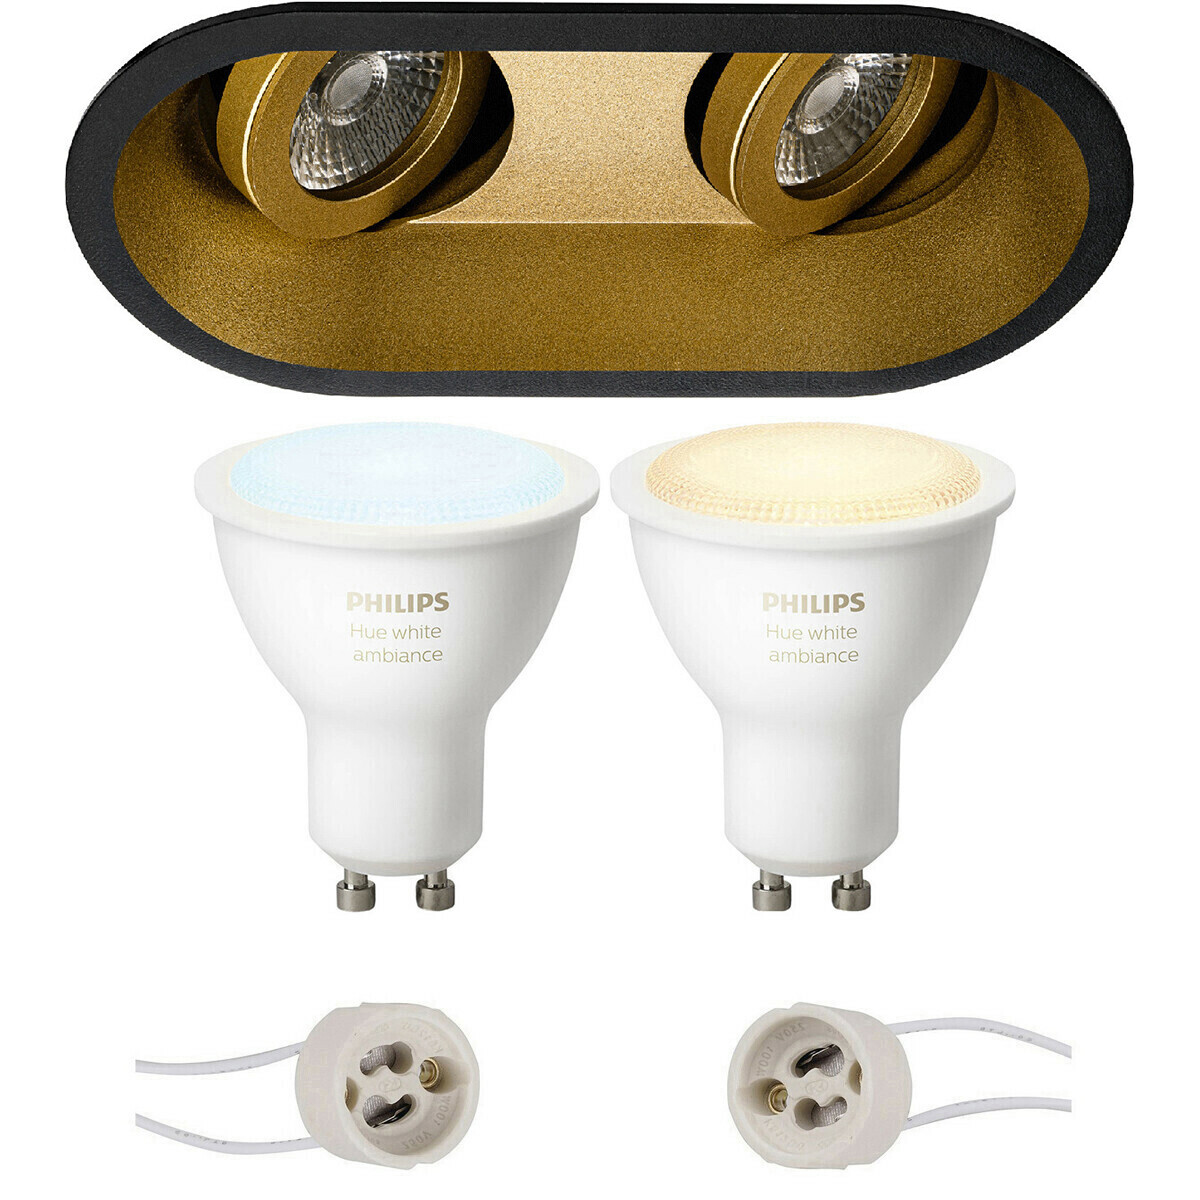 BES LED Pragmi Zano Pro - Inbouw Ovaal Dubbel - Mat Zwart/Goud - Kantelbaar - 185x93mm - Philips Hue - LED Spot Set GU10 - White Ambiance - Bluetooth